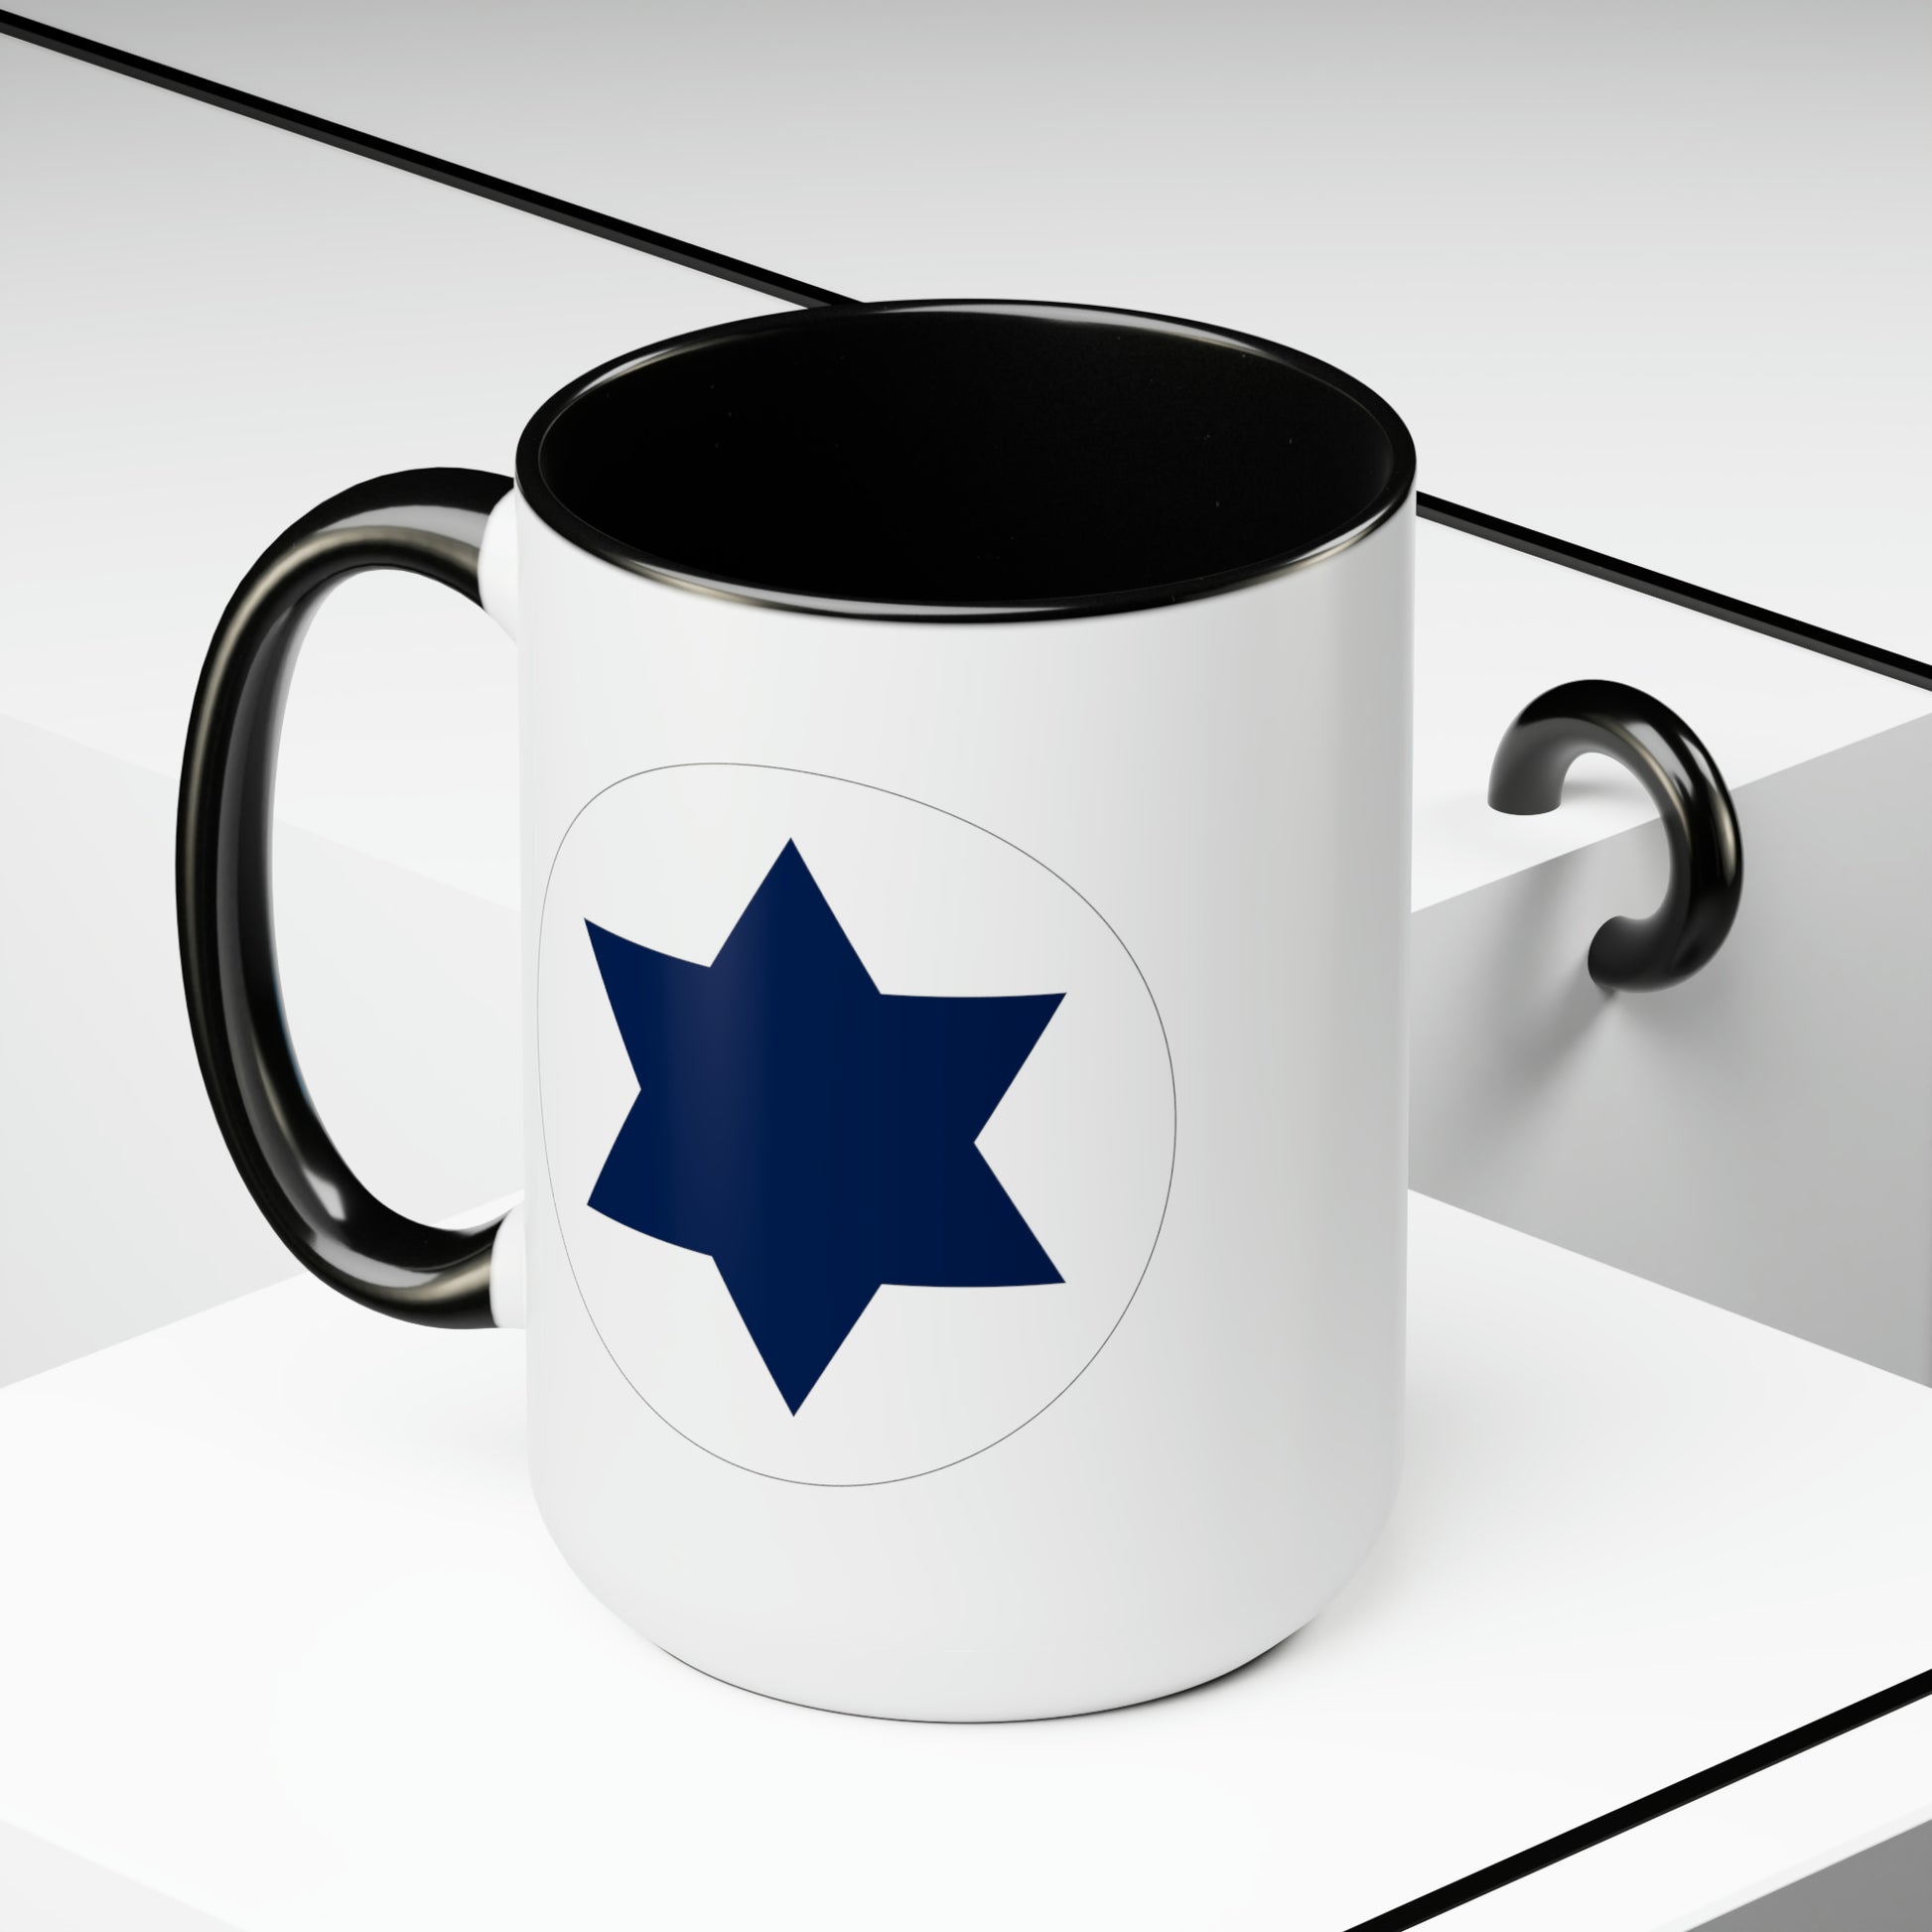 Israeli Air Force Roundel Coffee Mug - Double Sided Black Accent Ceramic 15oz - by TheGlassyLass.com